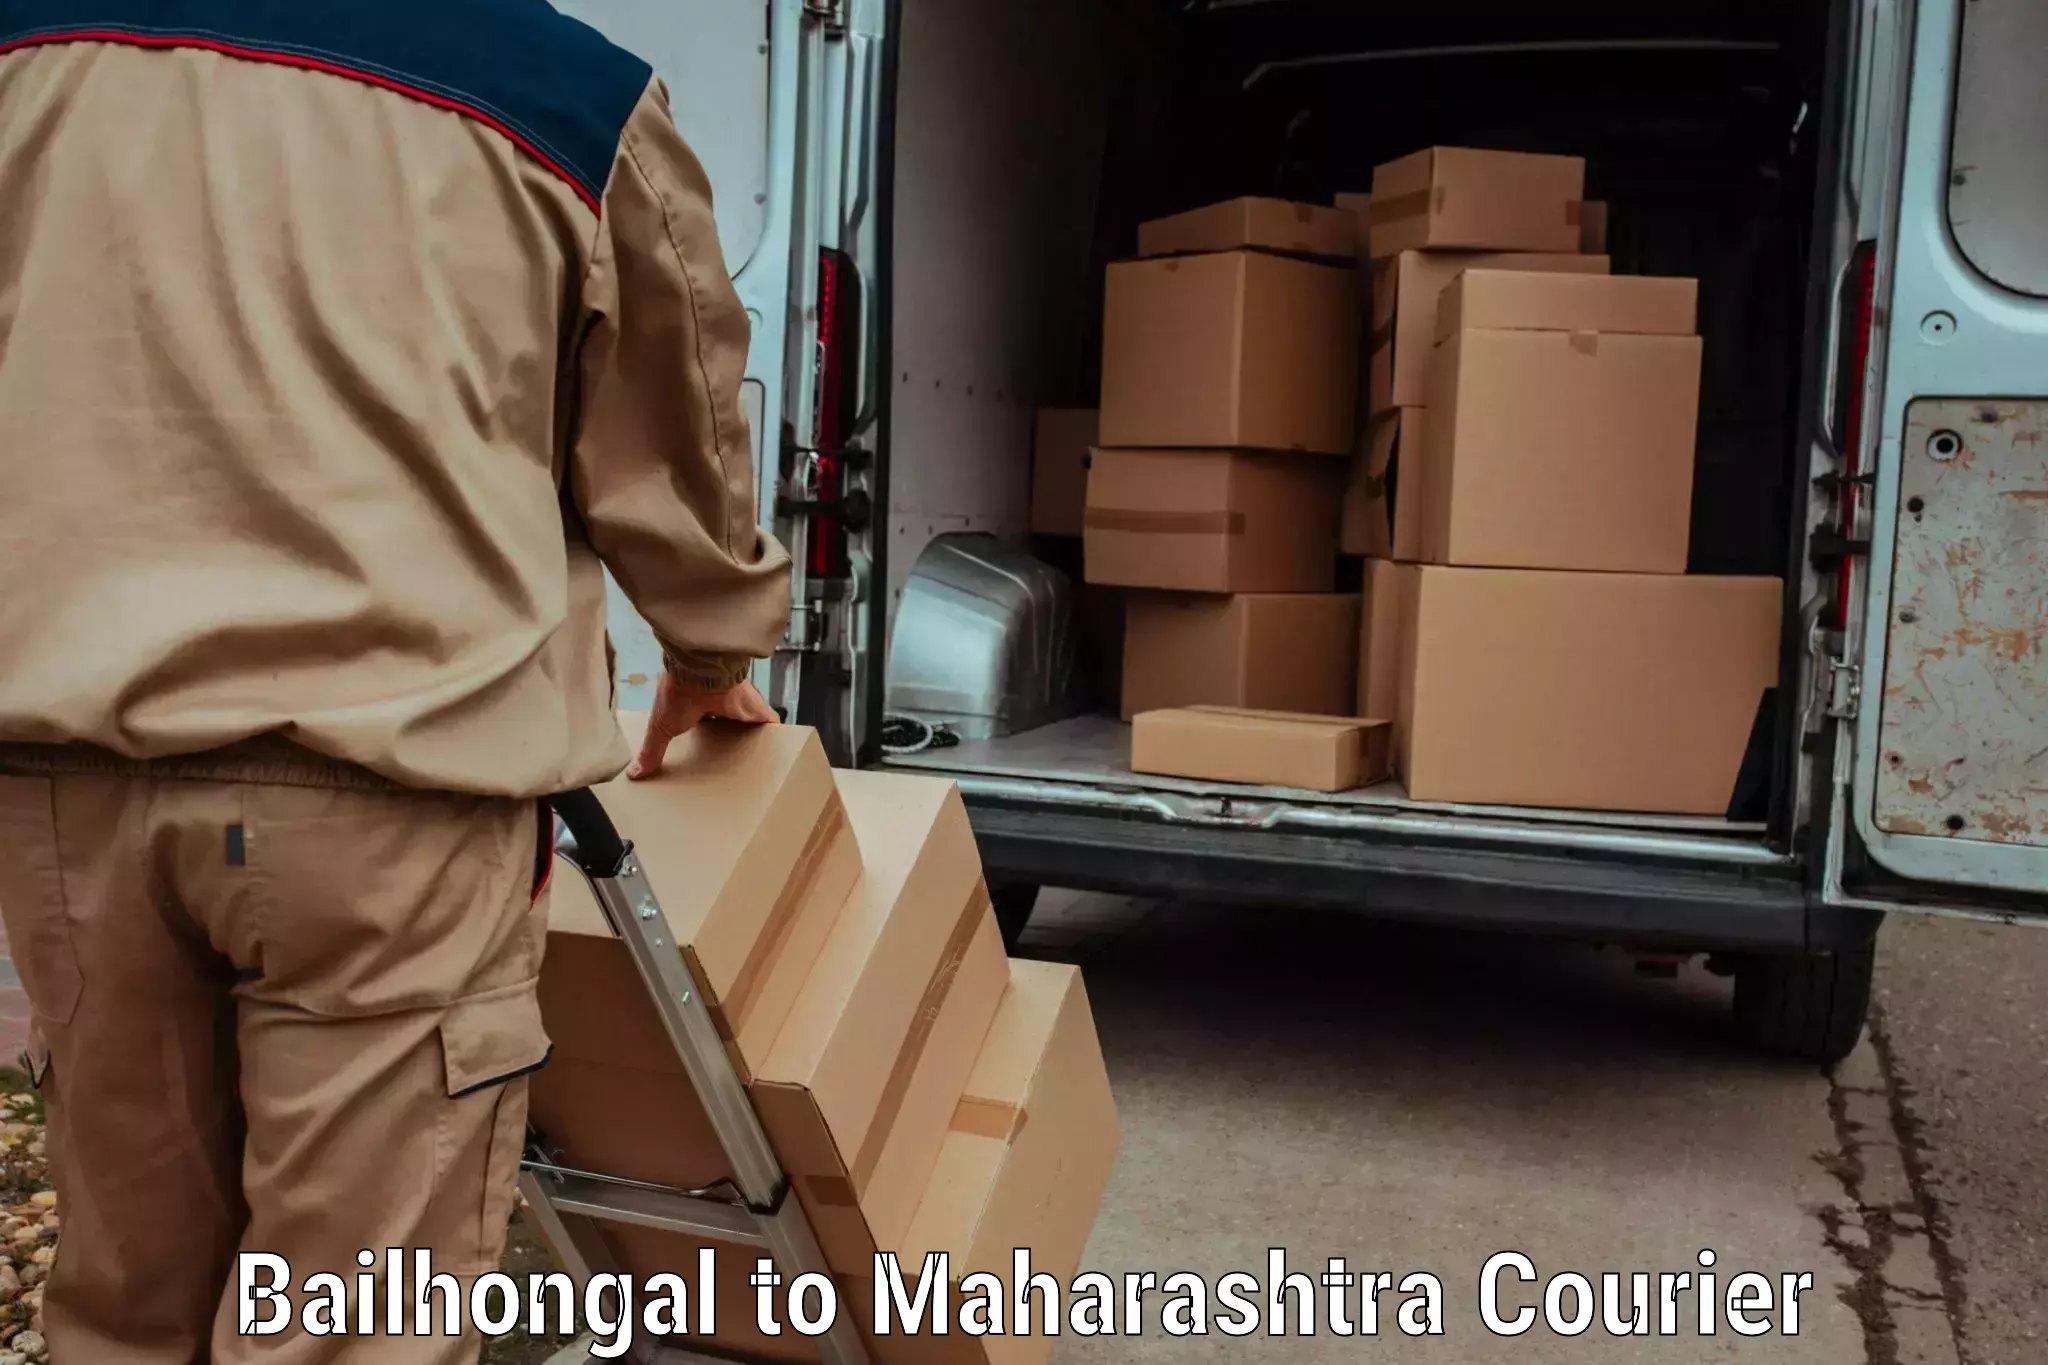 Courier service comparison in Bailhongal to Miraj